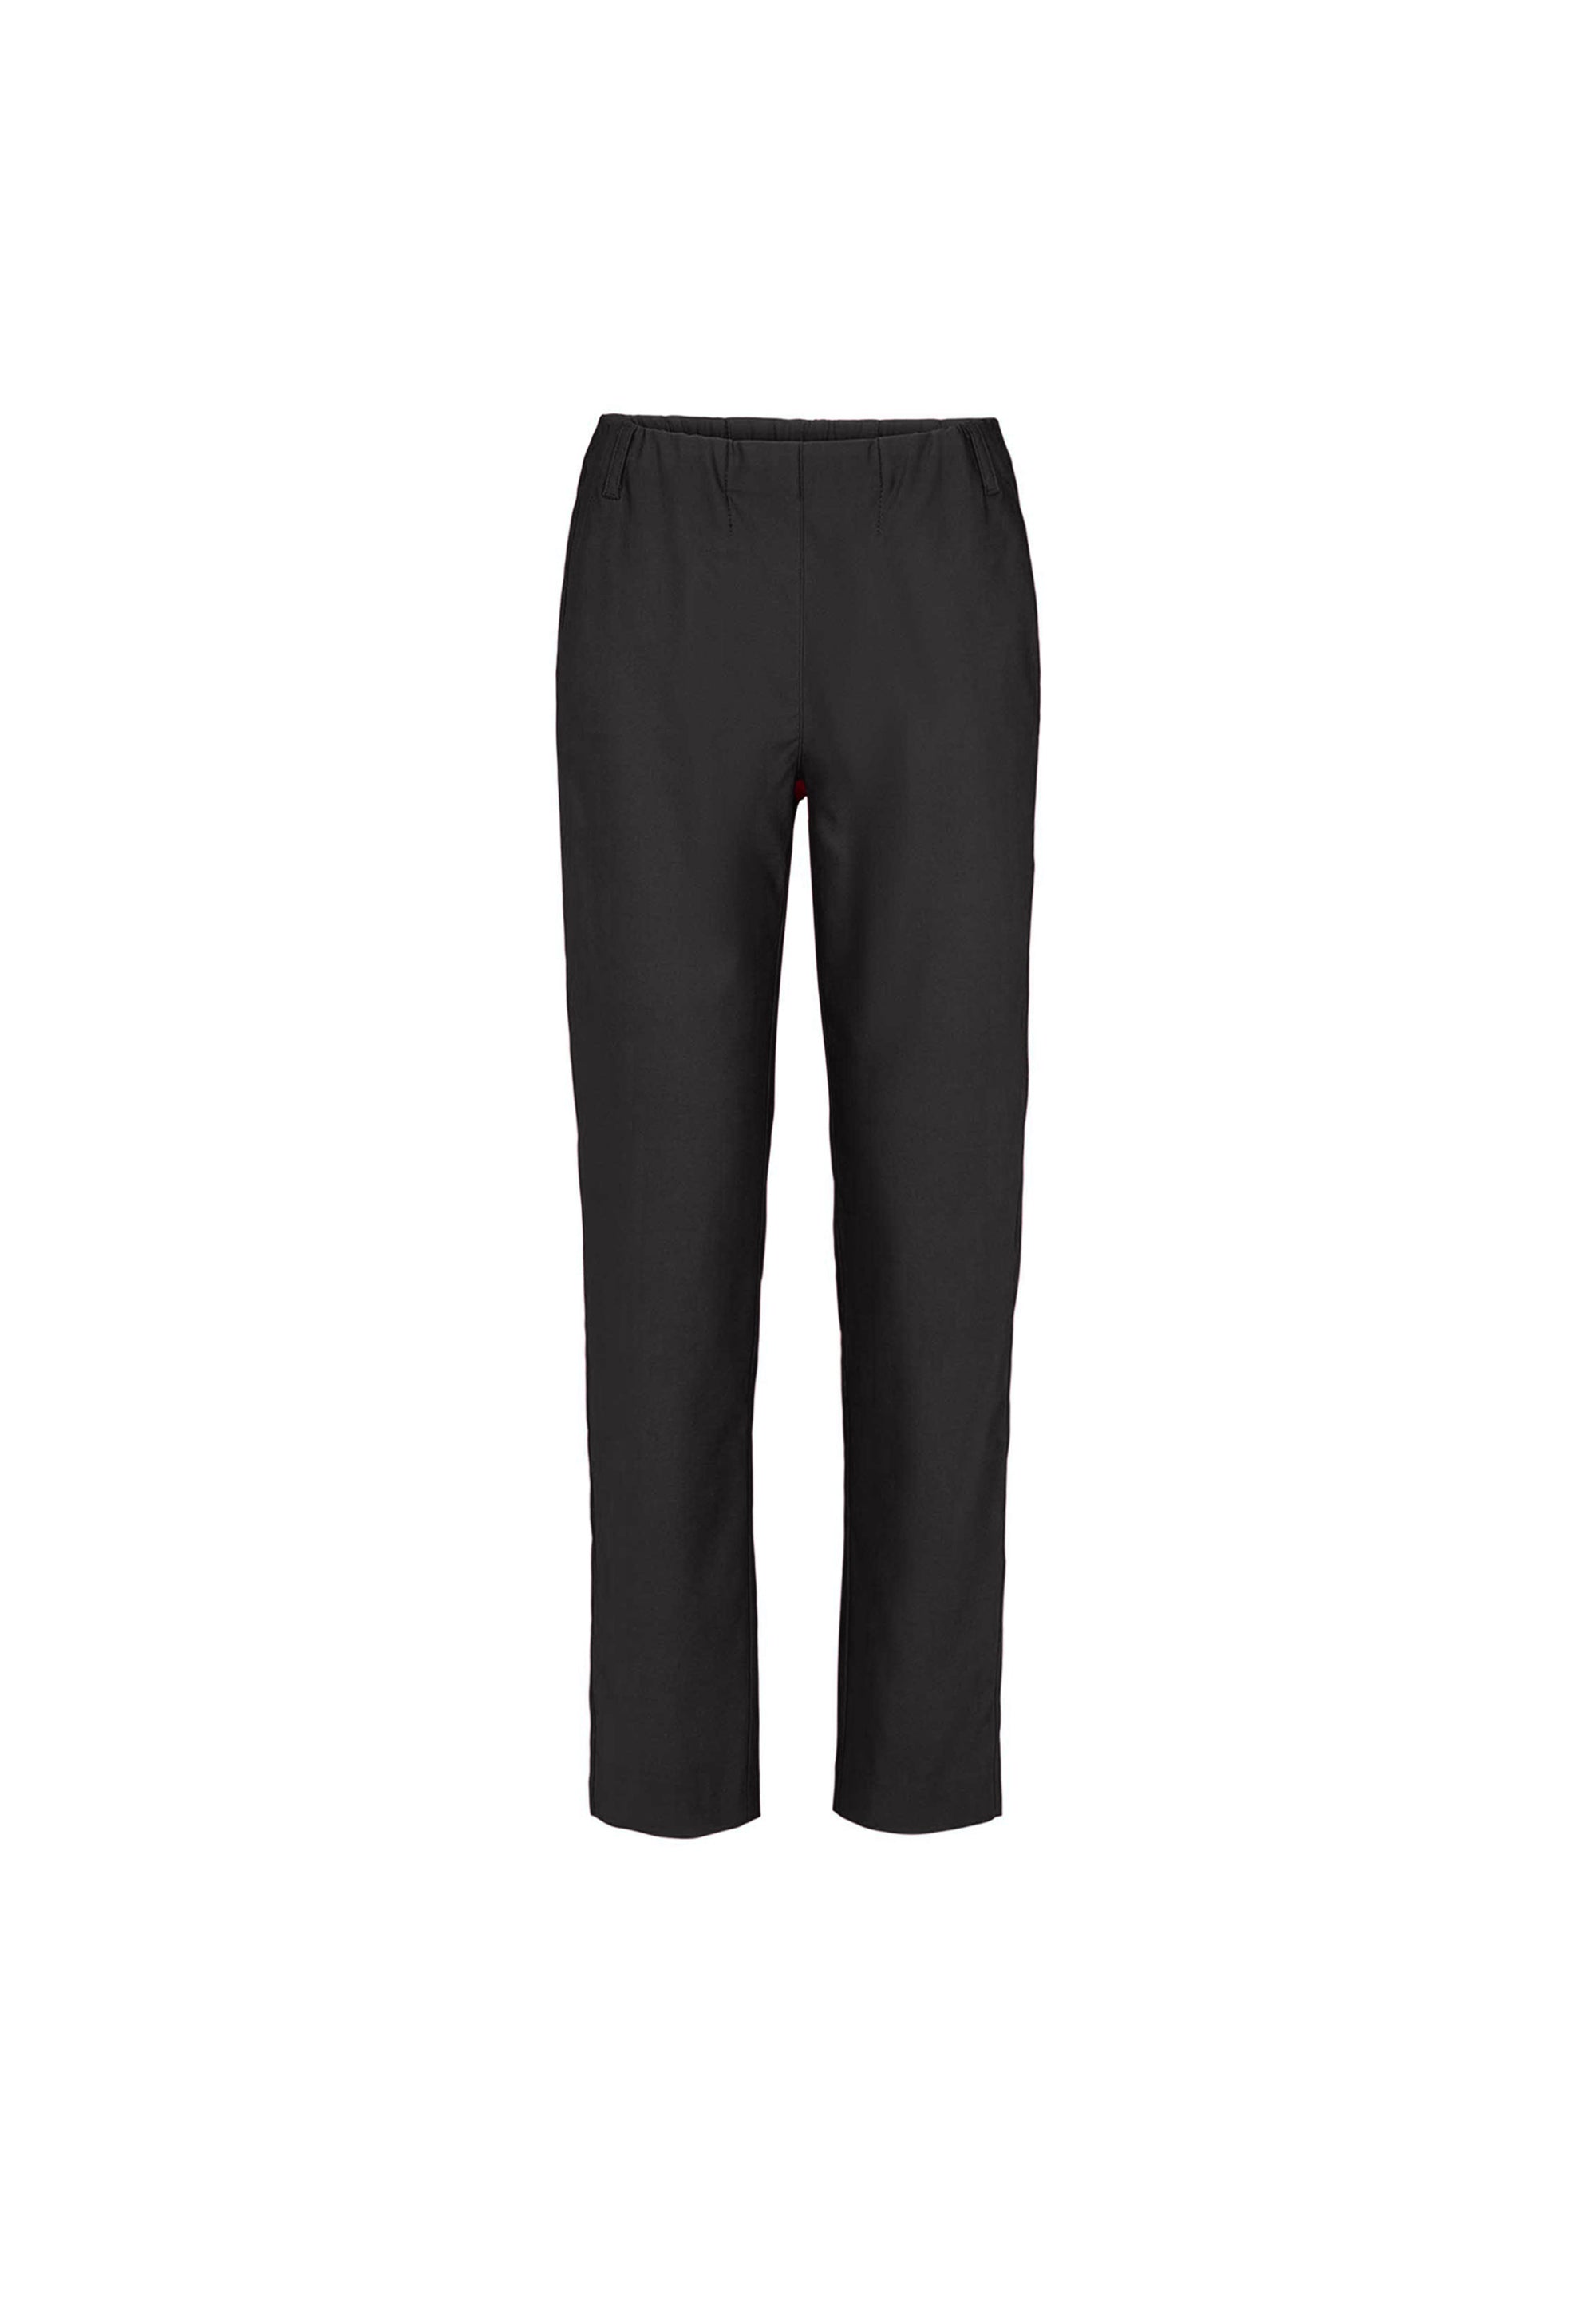 LAURIE Taylor Regular Medium Length Trousers REGULAR 99000 Black